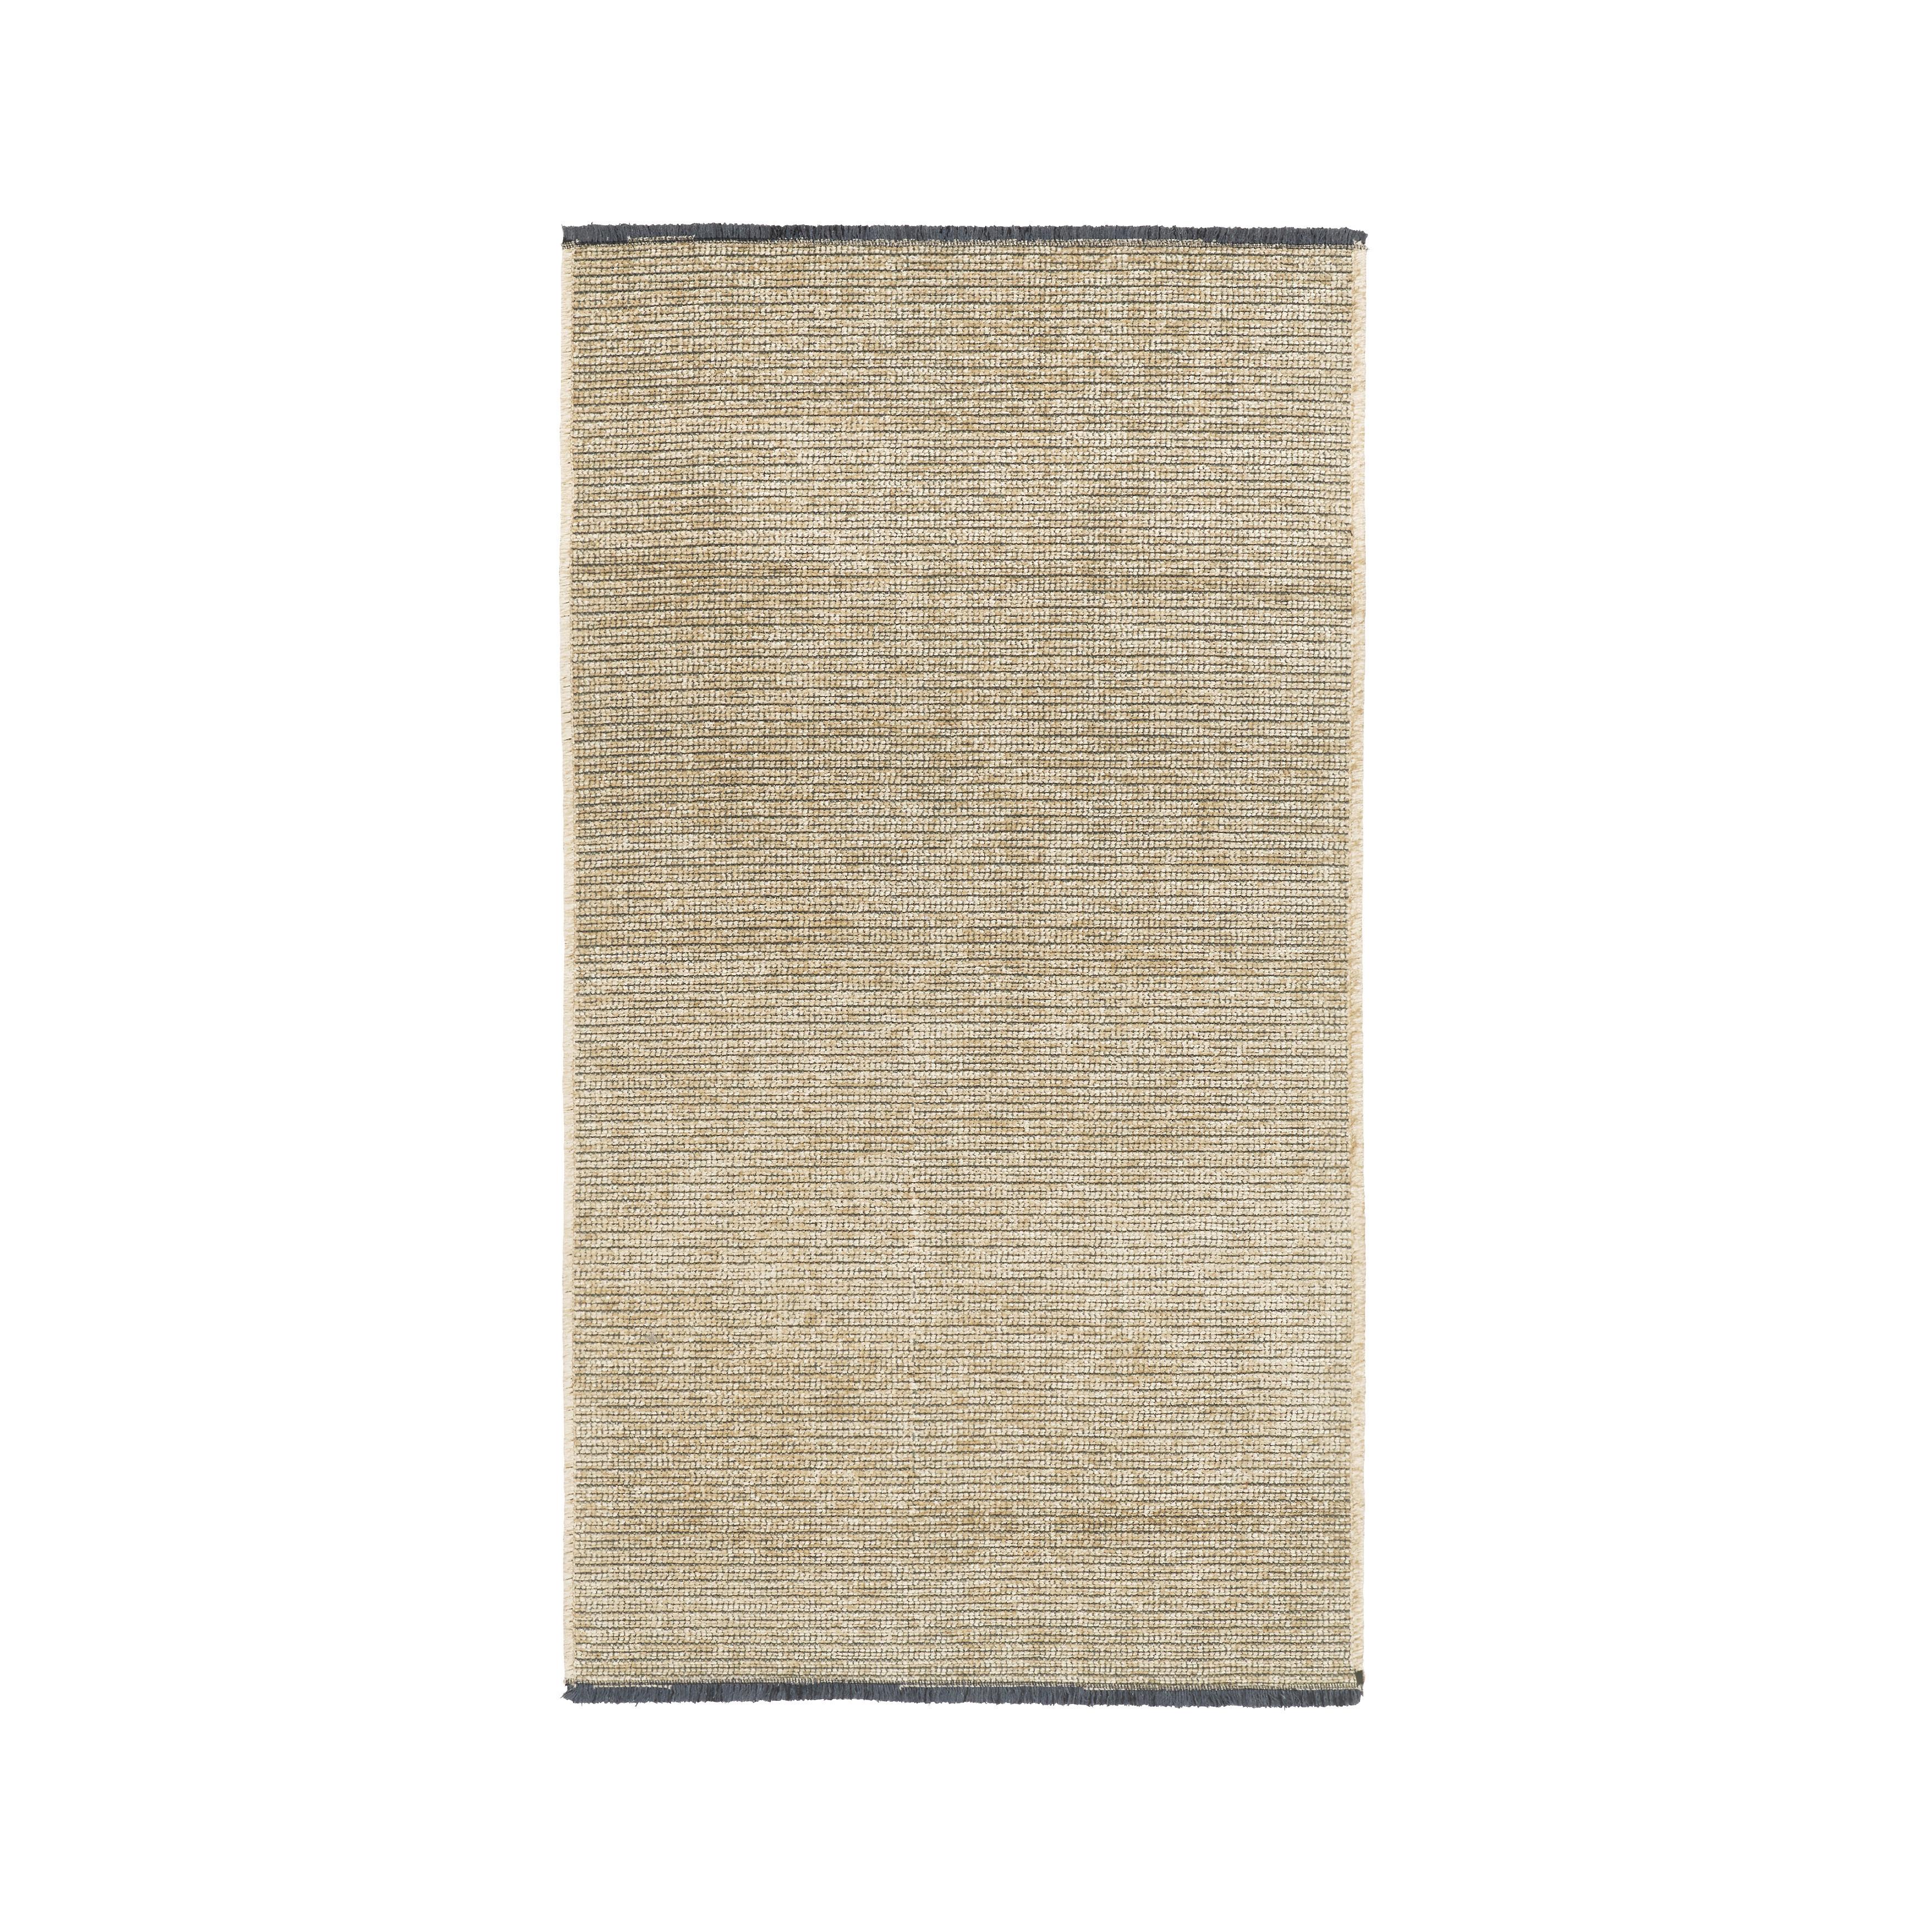 Covor țesut SILKE 2 - bej, Romantik / Landhaus, textil (120/170cm) - Modern Living